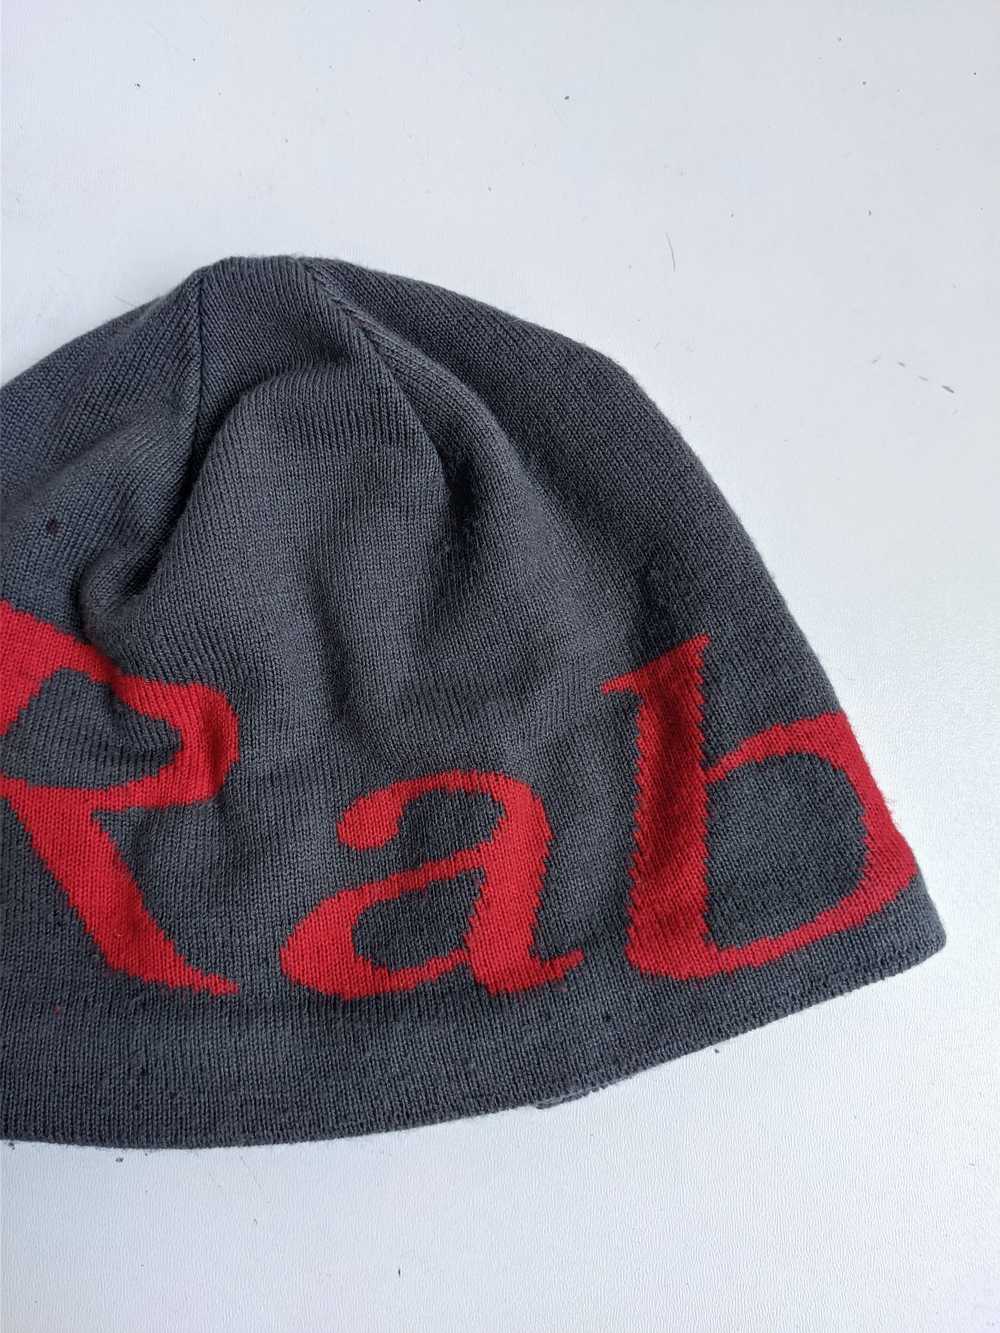 Outdoor Life × Rab Rab beanie hat big logo outdoor - image 6